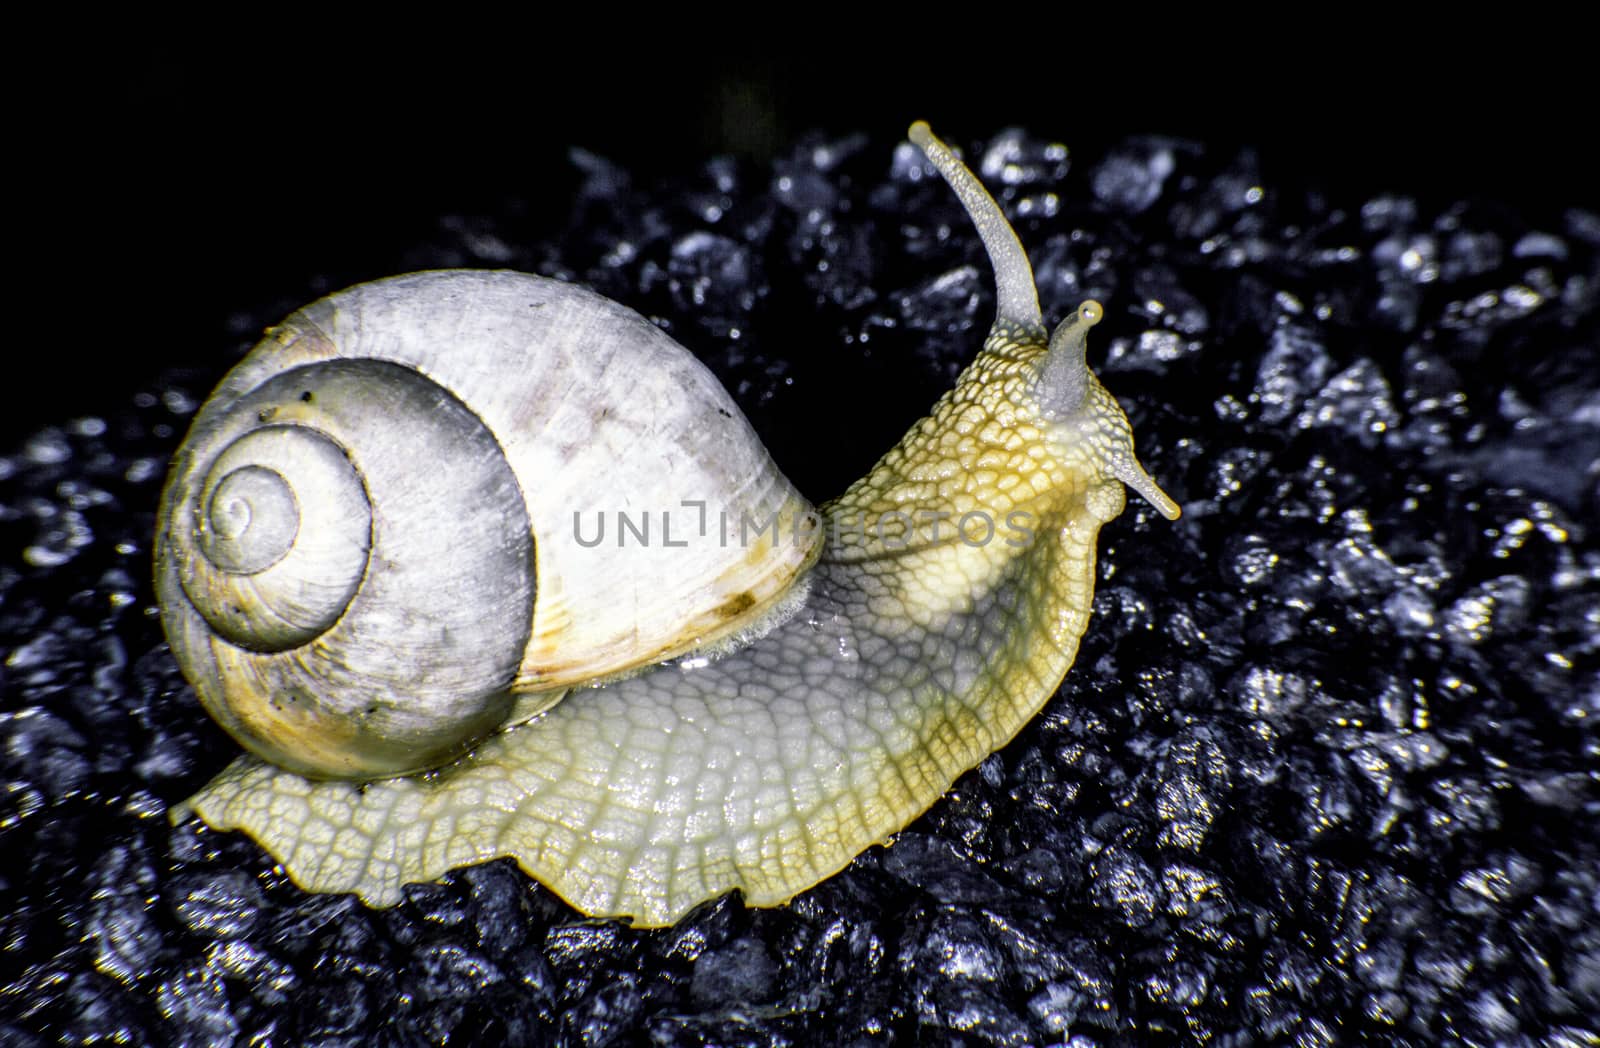 Burgundy snail by thomas_males